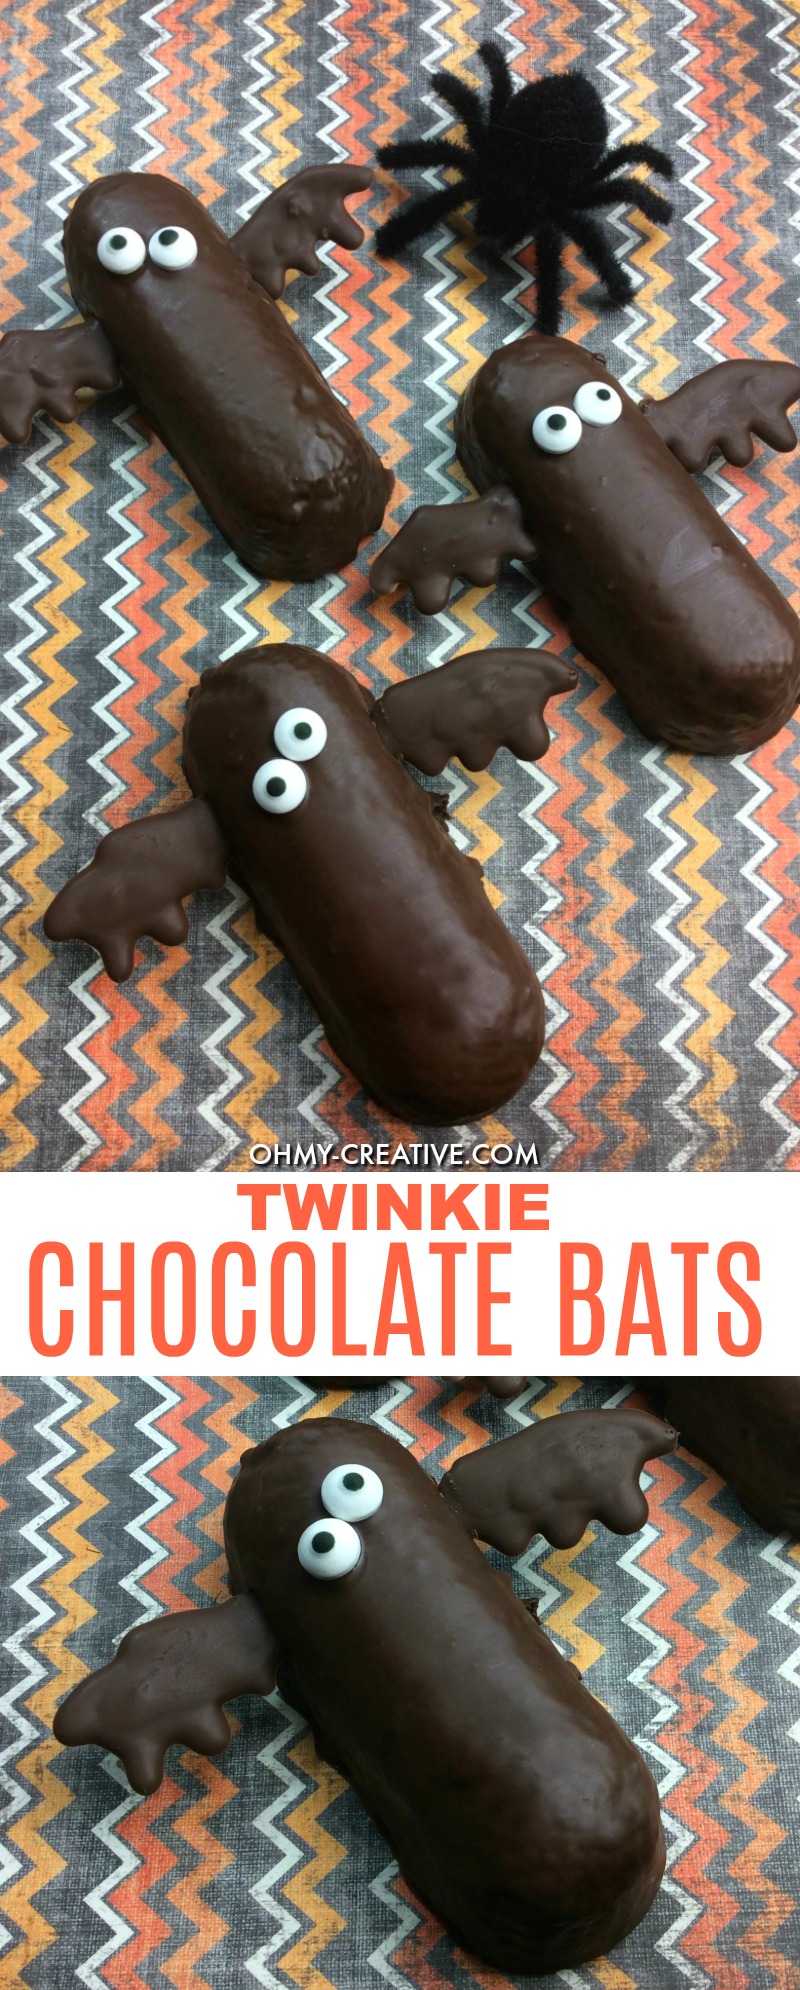 Halloween Twinkie Chocolate Bats | OHMY-CREATIVE.COM | Halloween Bat Desserts | Bat Treats | Halloween Pops | Halloween Food Ideas for Kids | Halloween Finger Foods | Halloween Themed Food | Easy Halloween Treats | Chocolate 